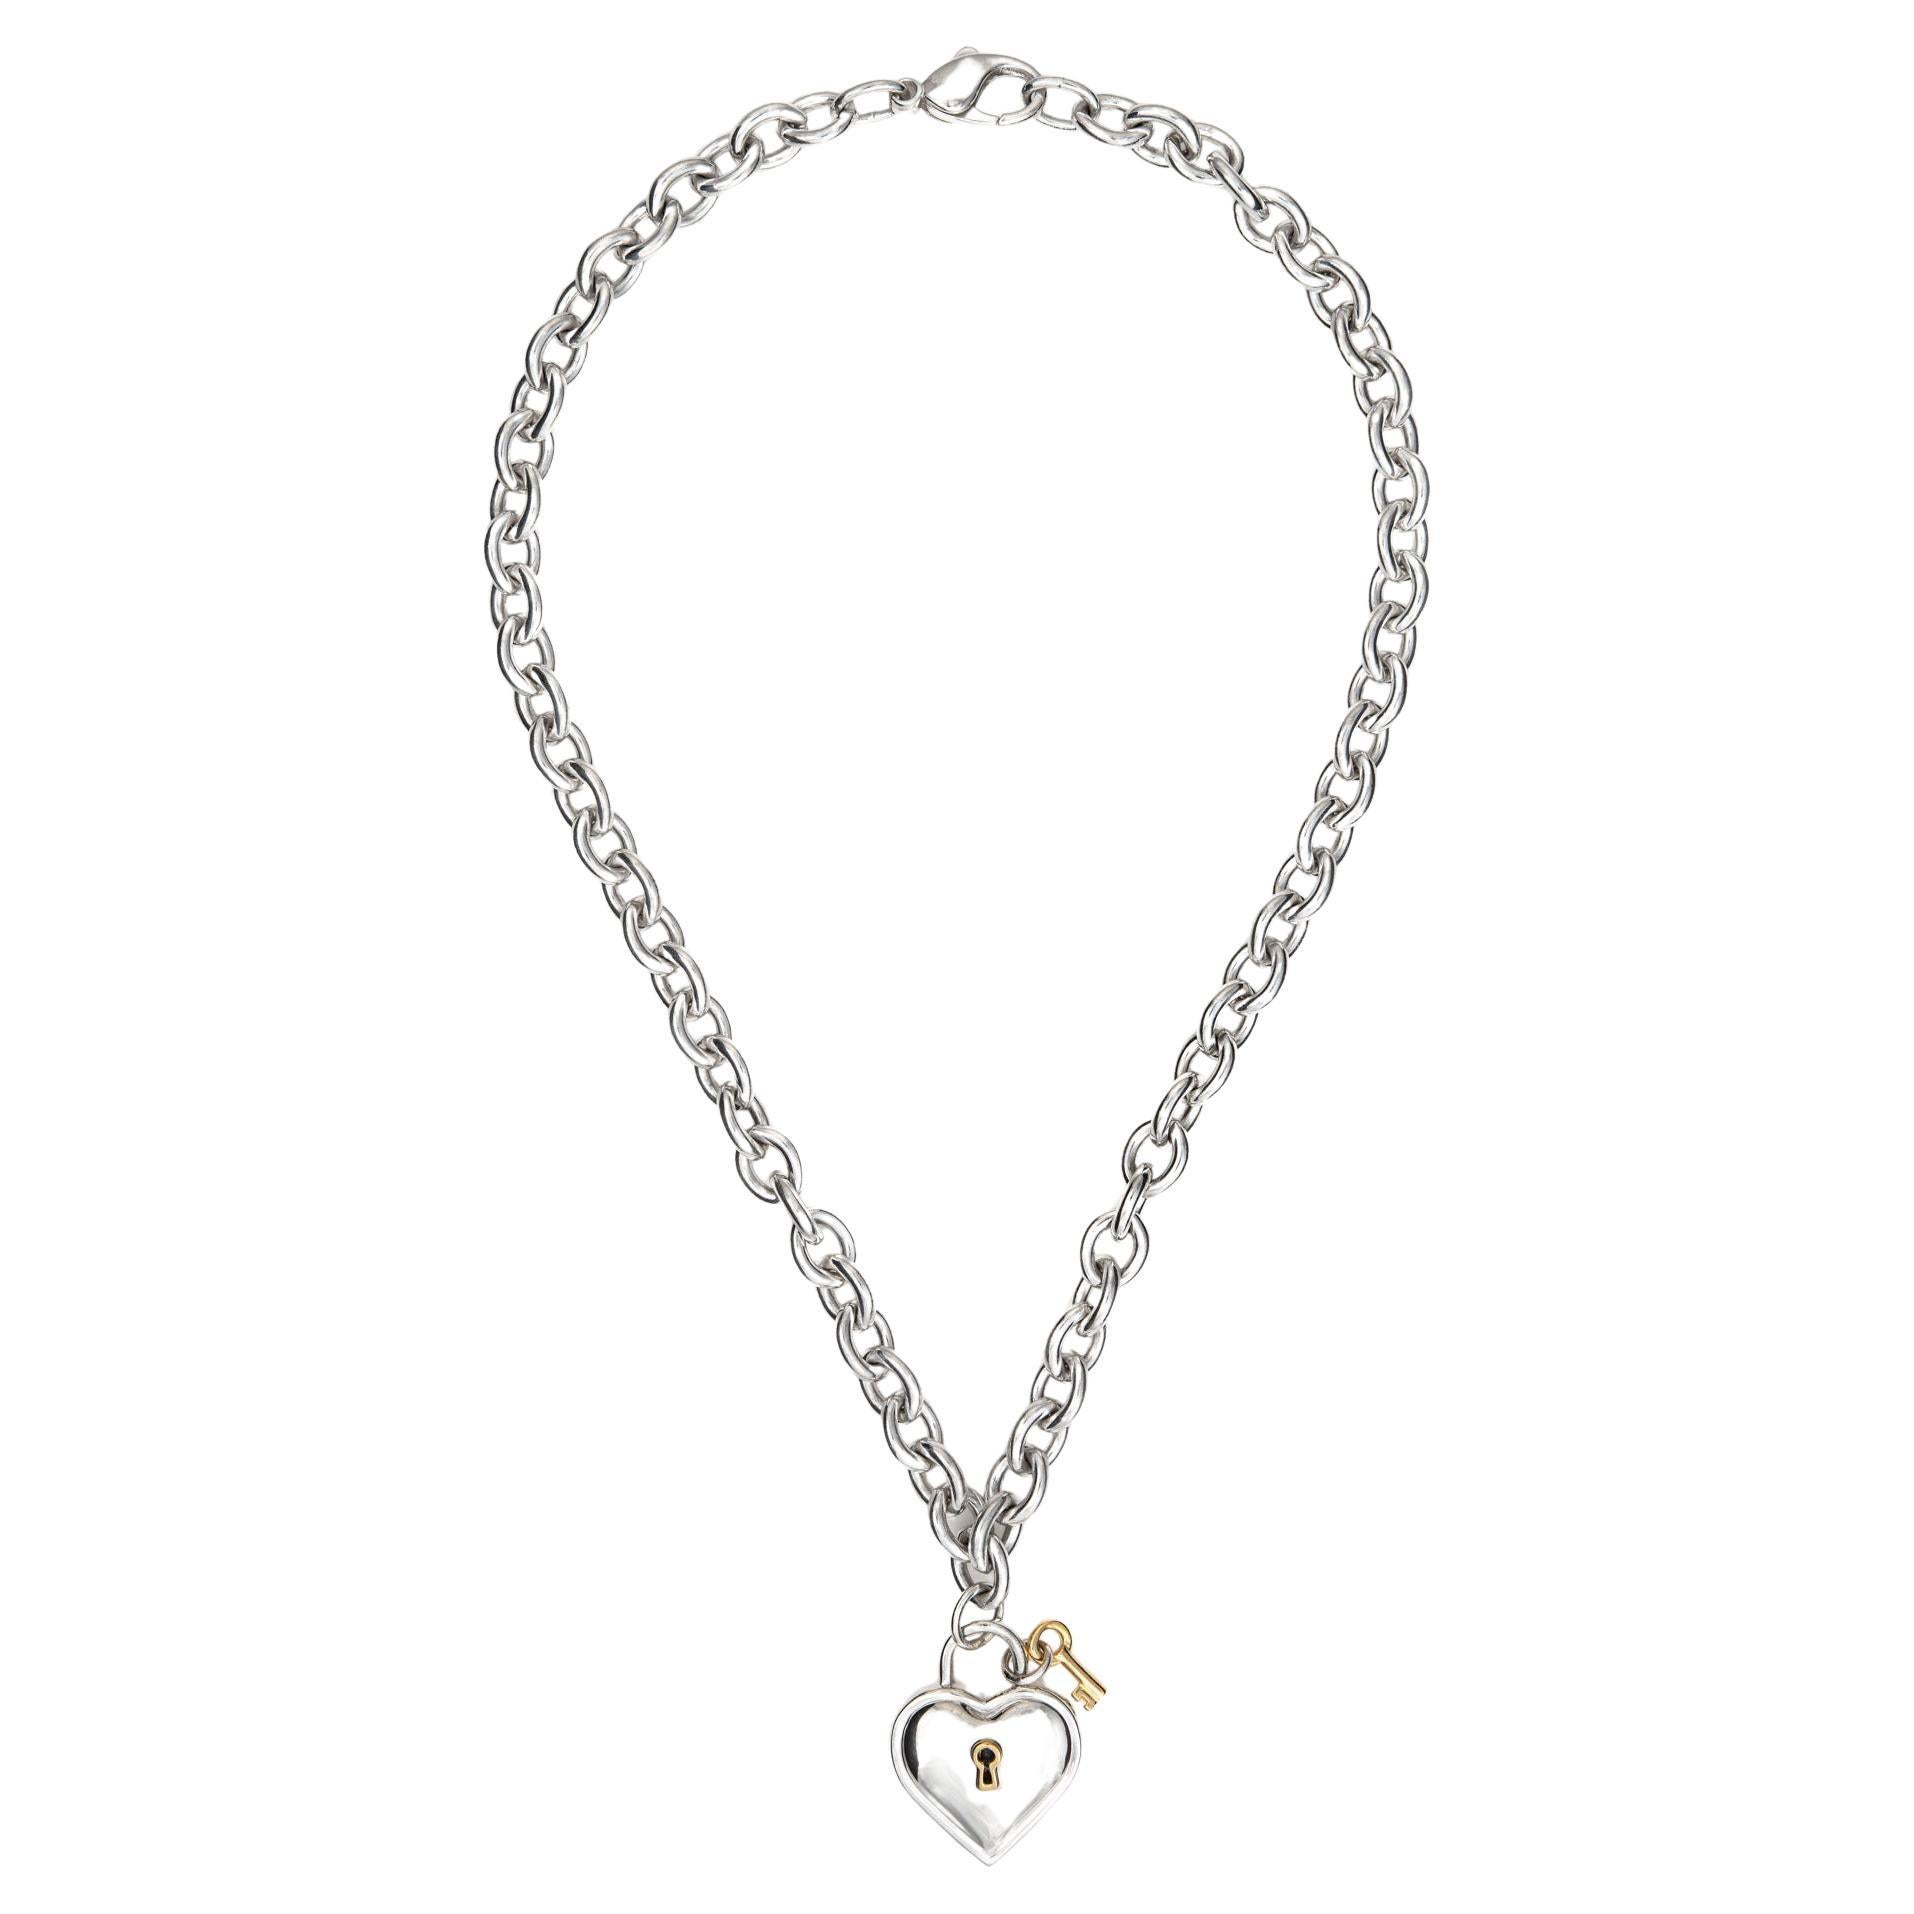 1994 Tiffany & Co Heart Key Necklace Vintage Sterling Silver 18k Gold Jewelry